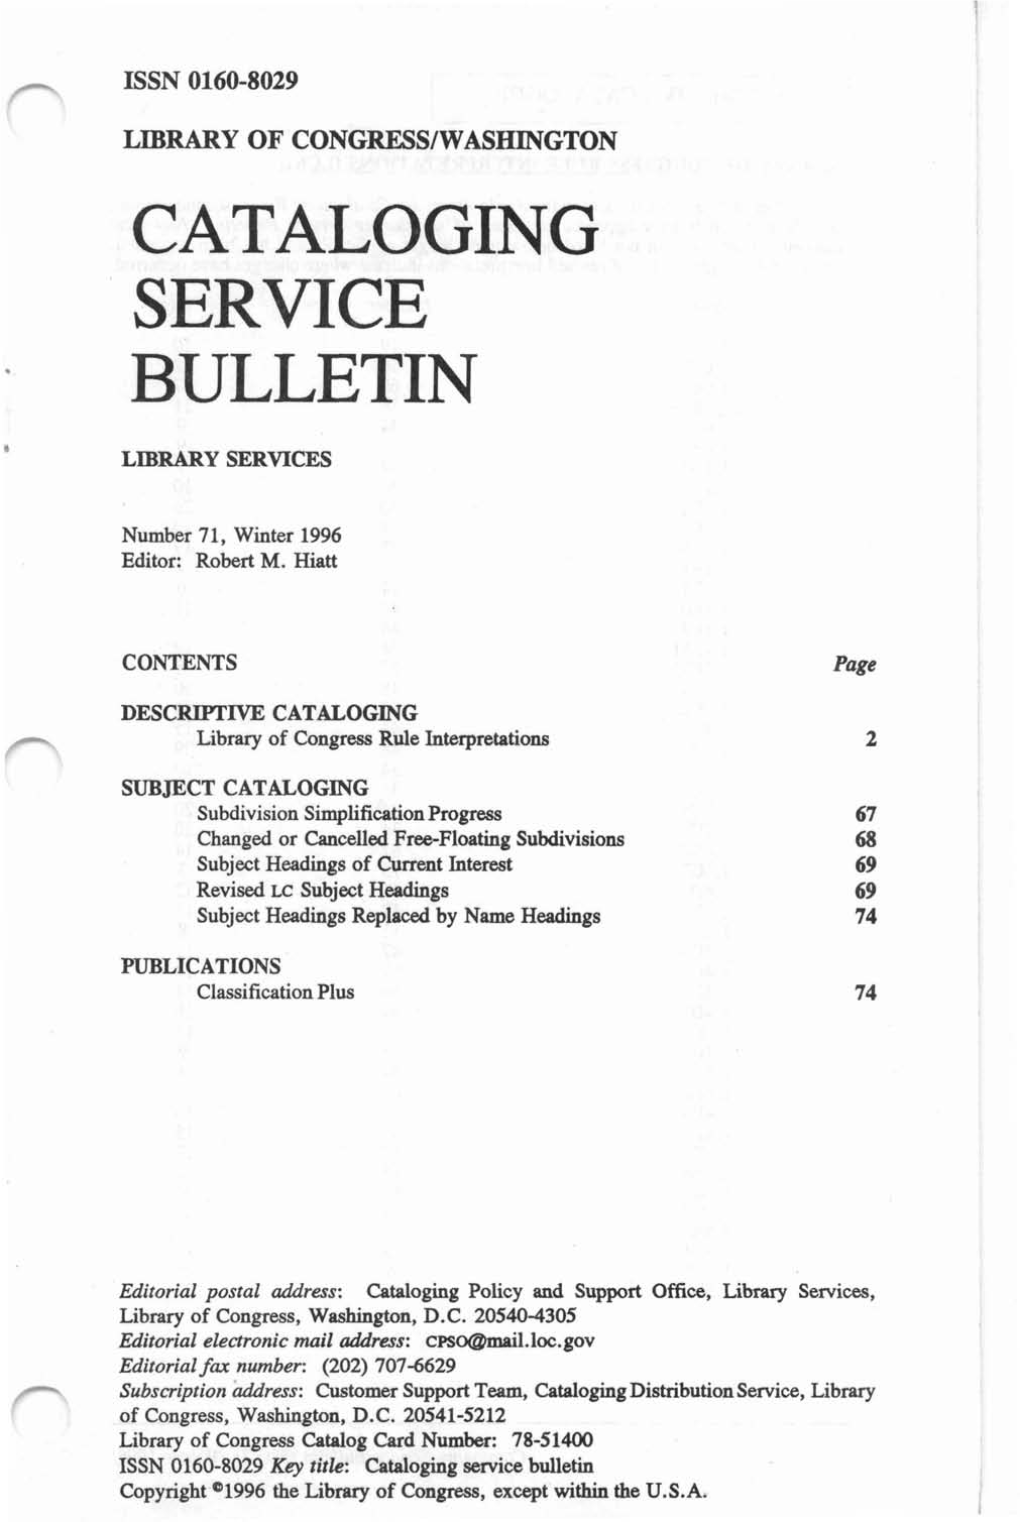 Cataloging Service Bulletin 071, Winter 1996